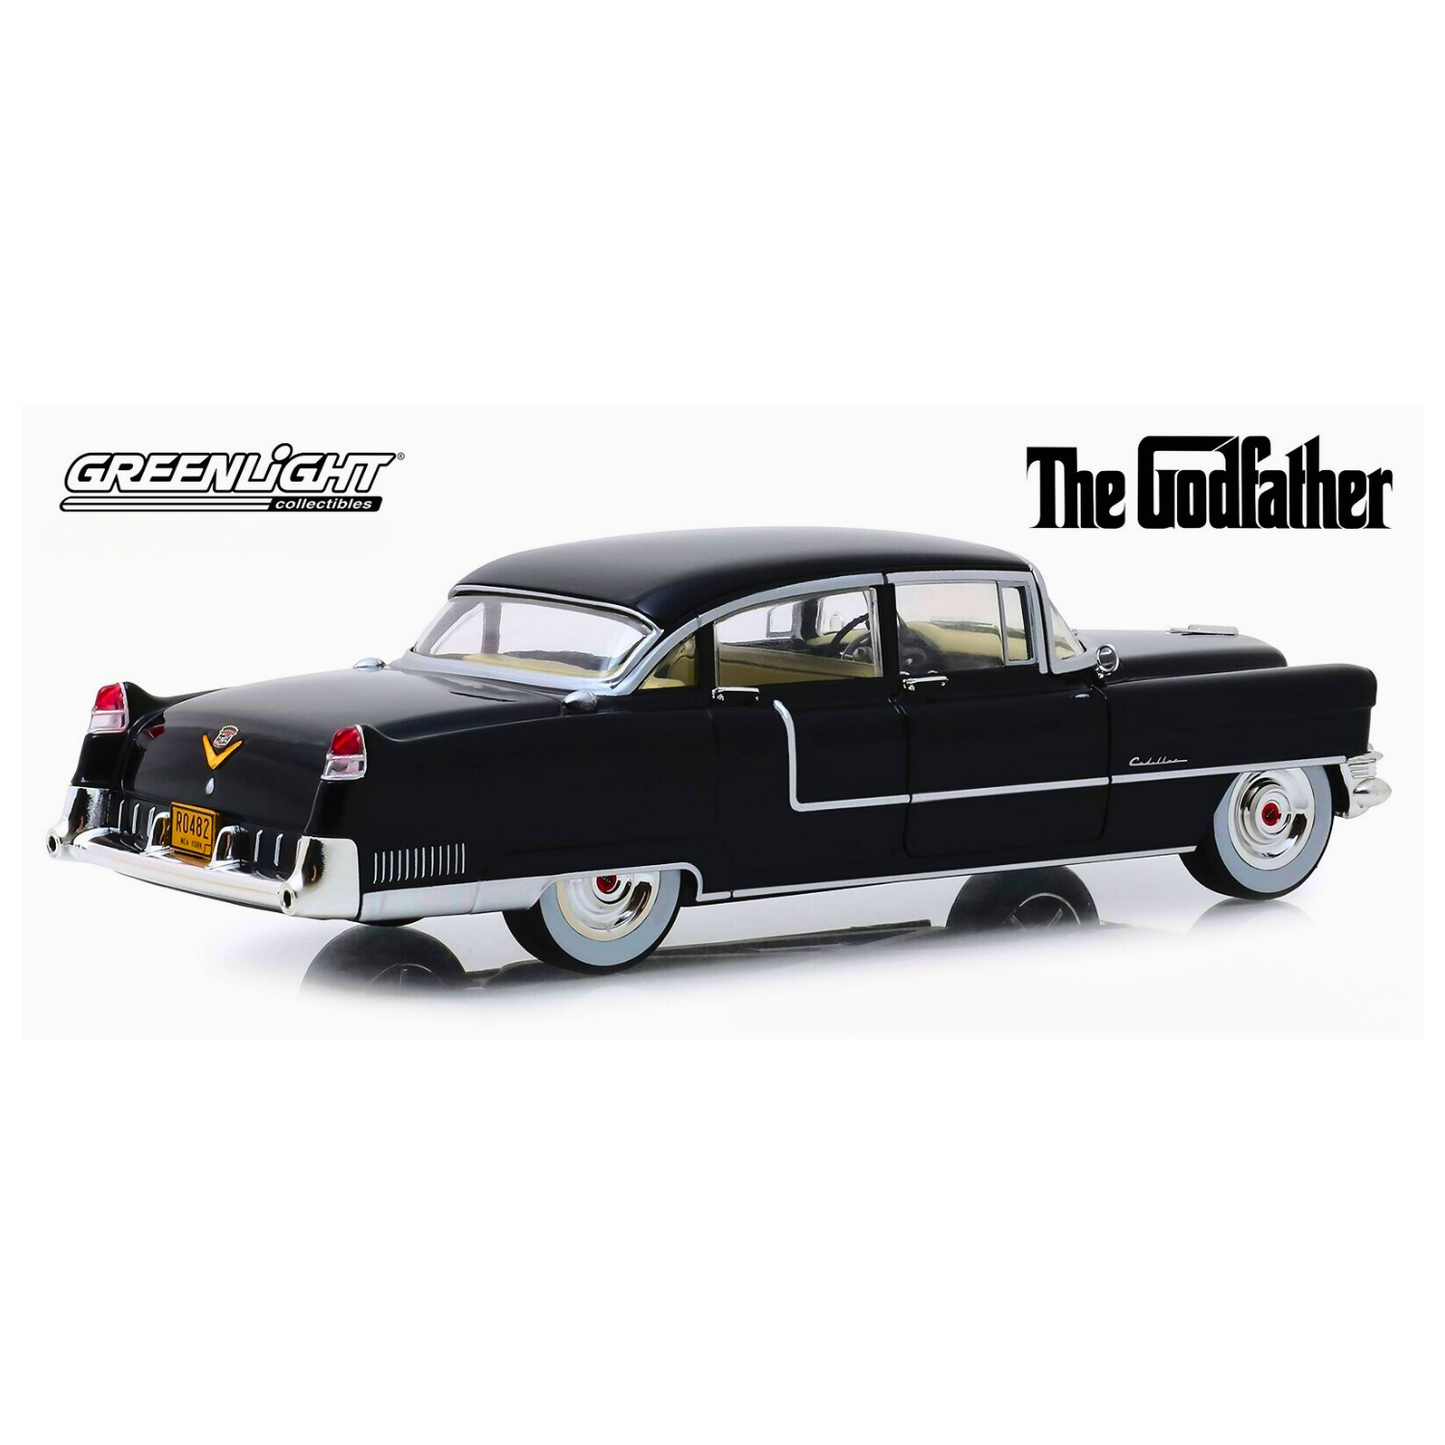 Greenlight Hollywood The Godfather 1955 Cadillac Fleetwood 1:24 Diecast